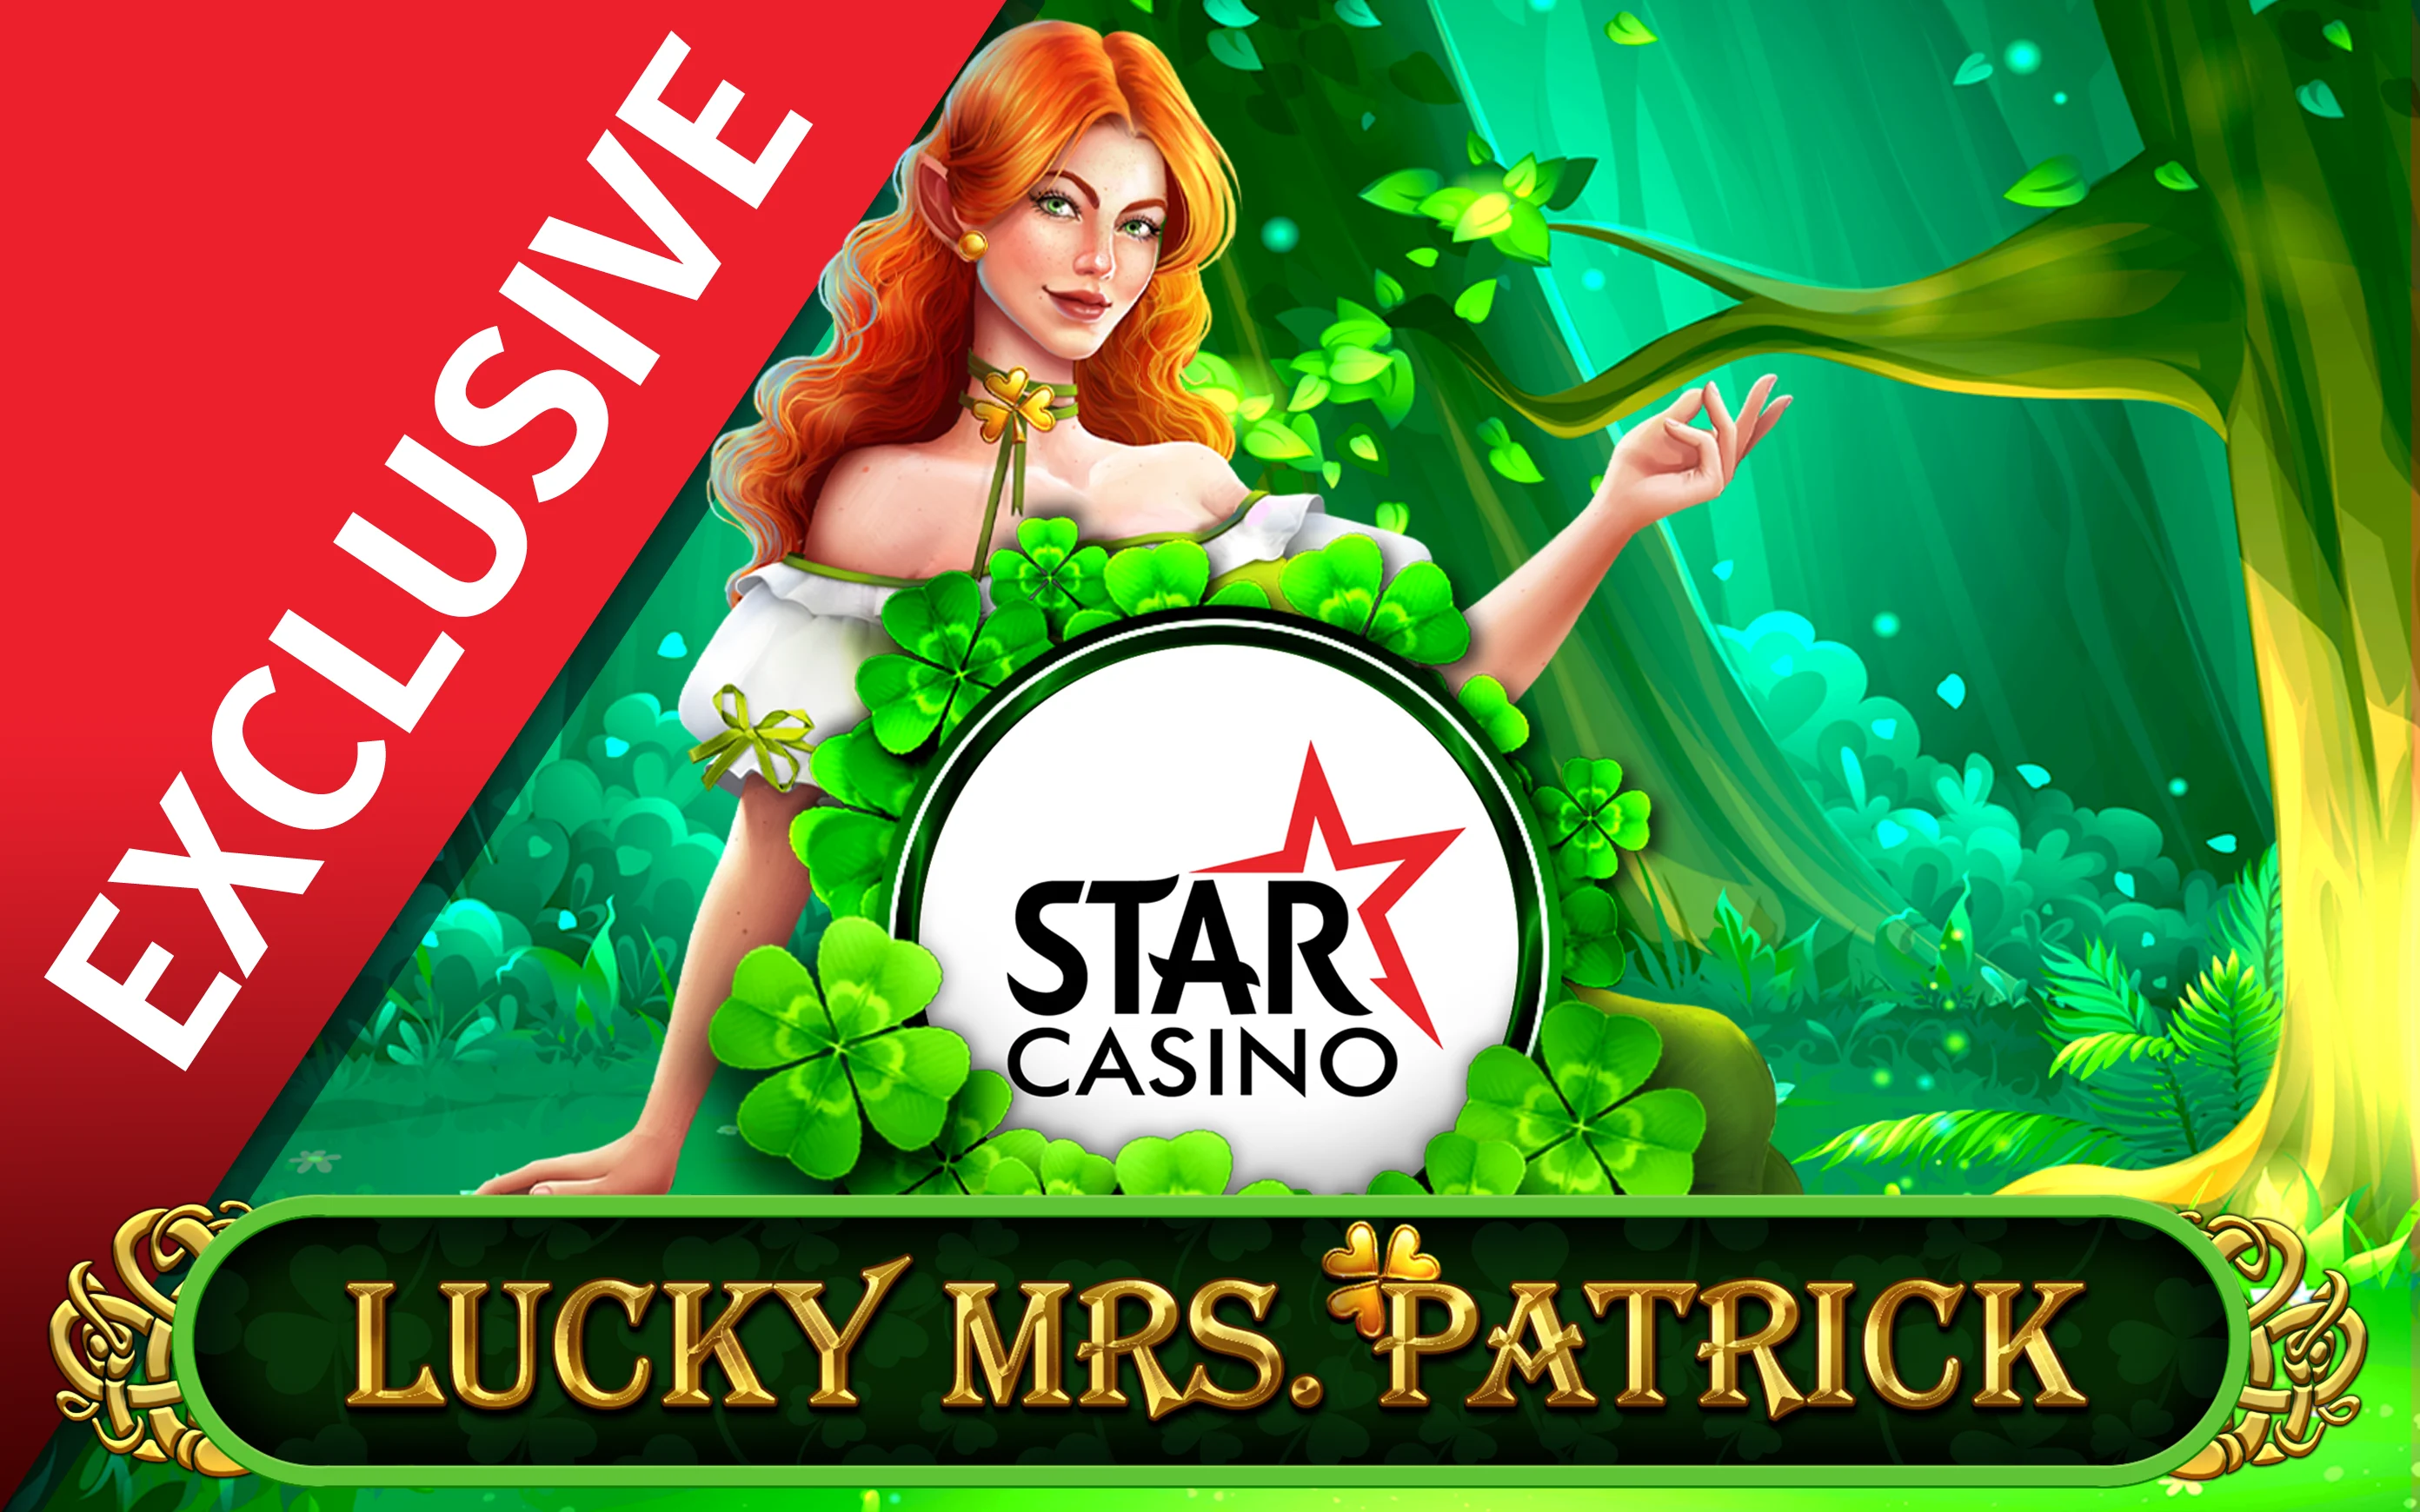 Gioca a Starcasino Lucky Mrs Patrick sul casino online Starcasino.be